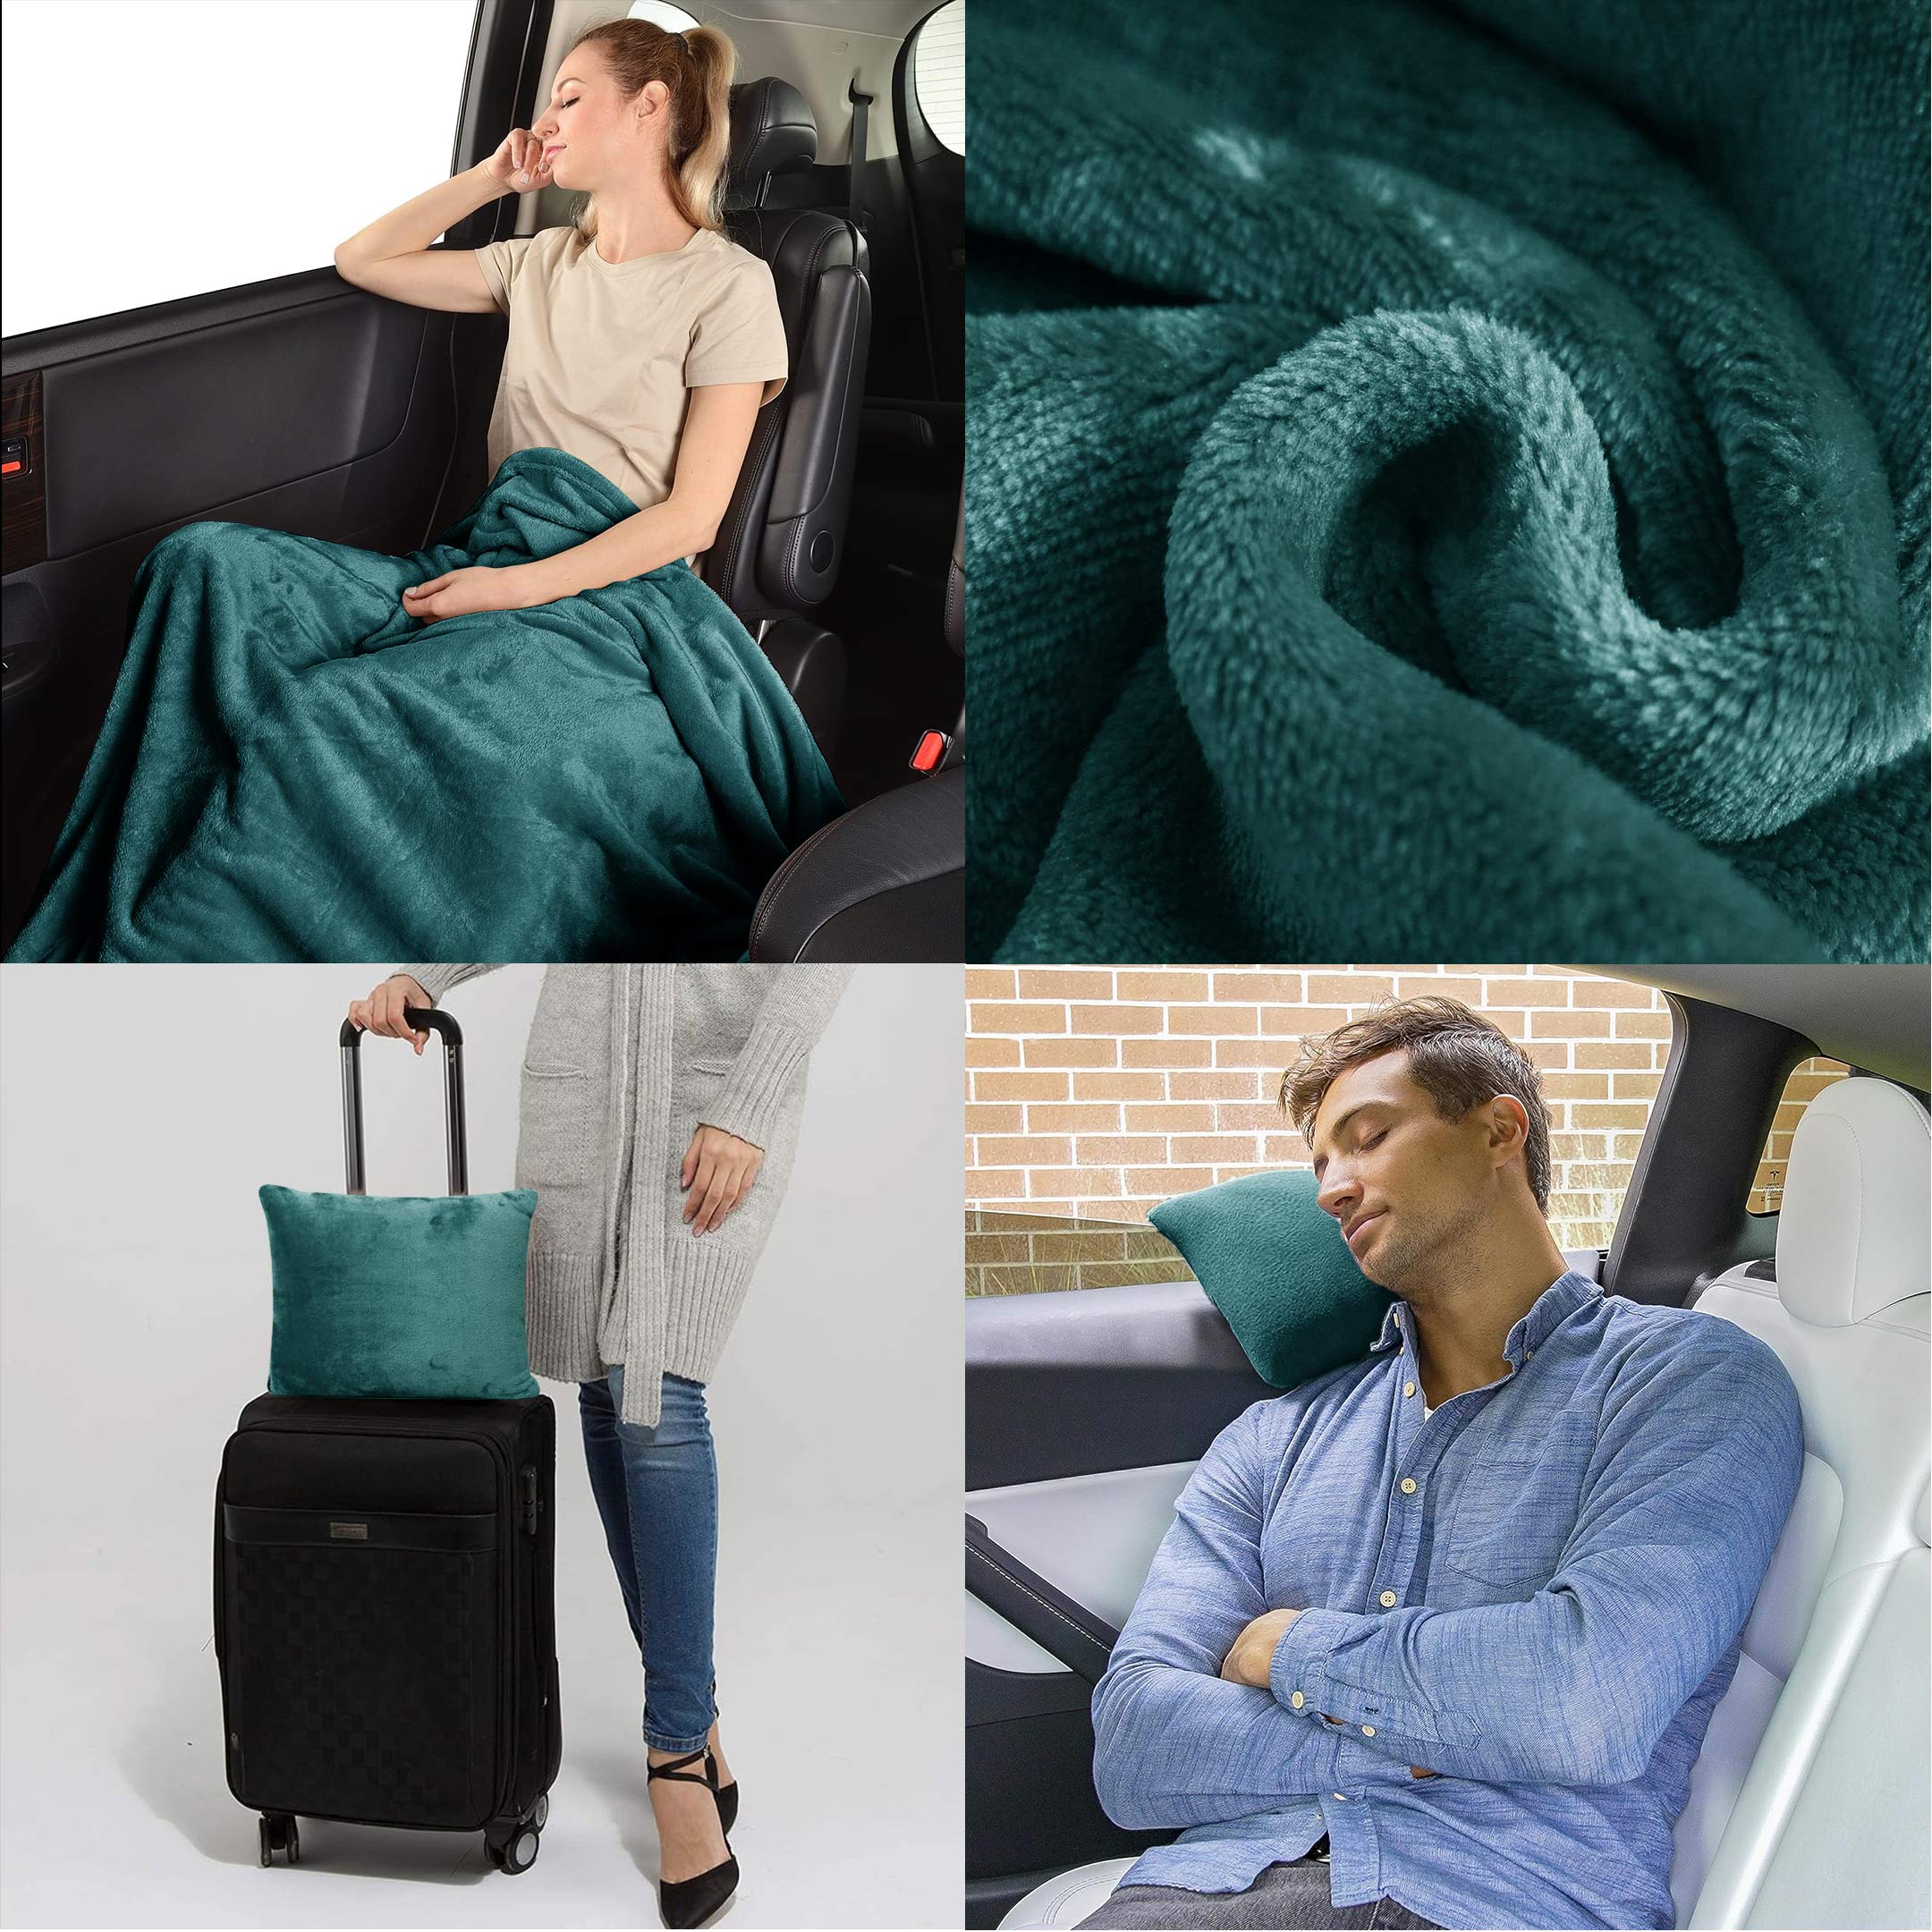 Portable Travel Blanket Pillow Teal